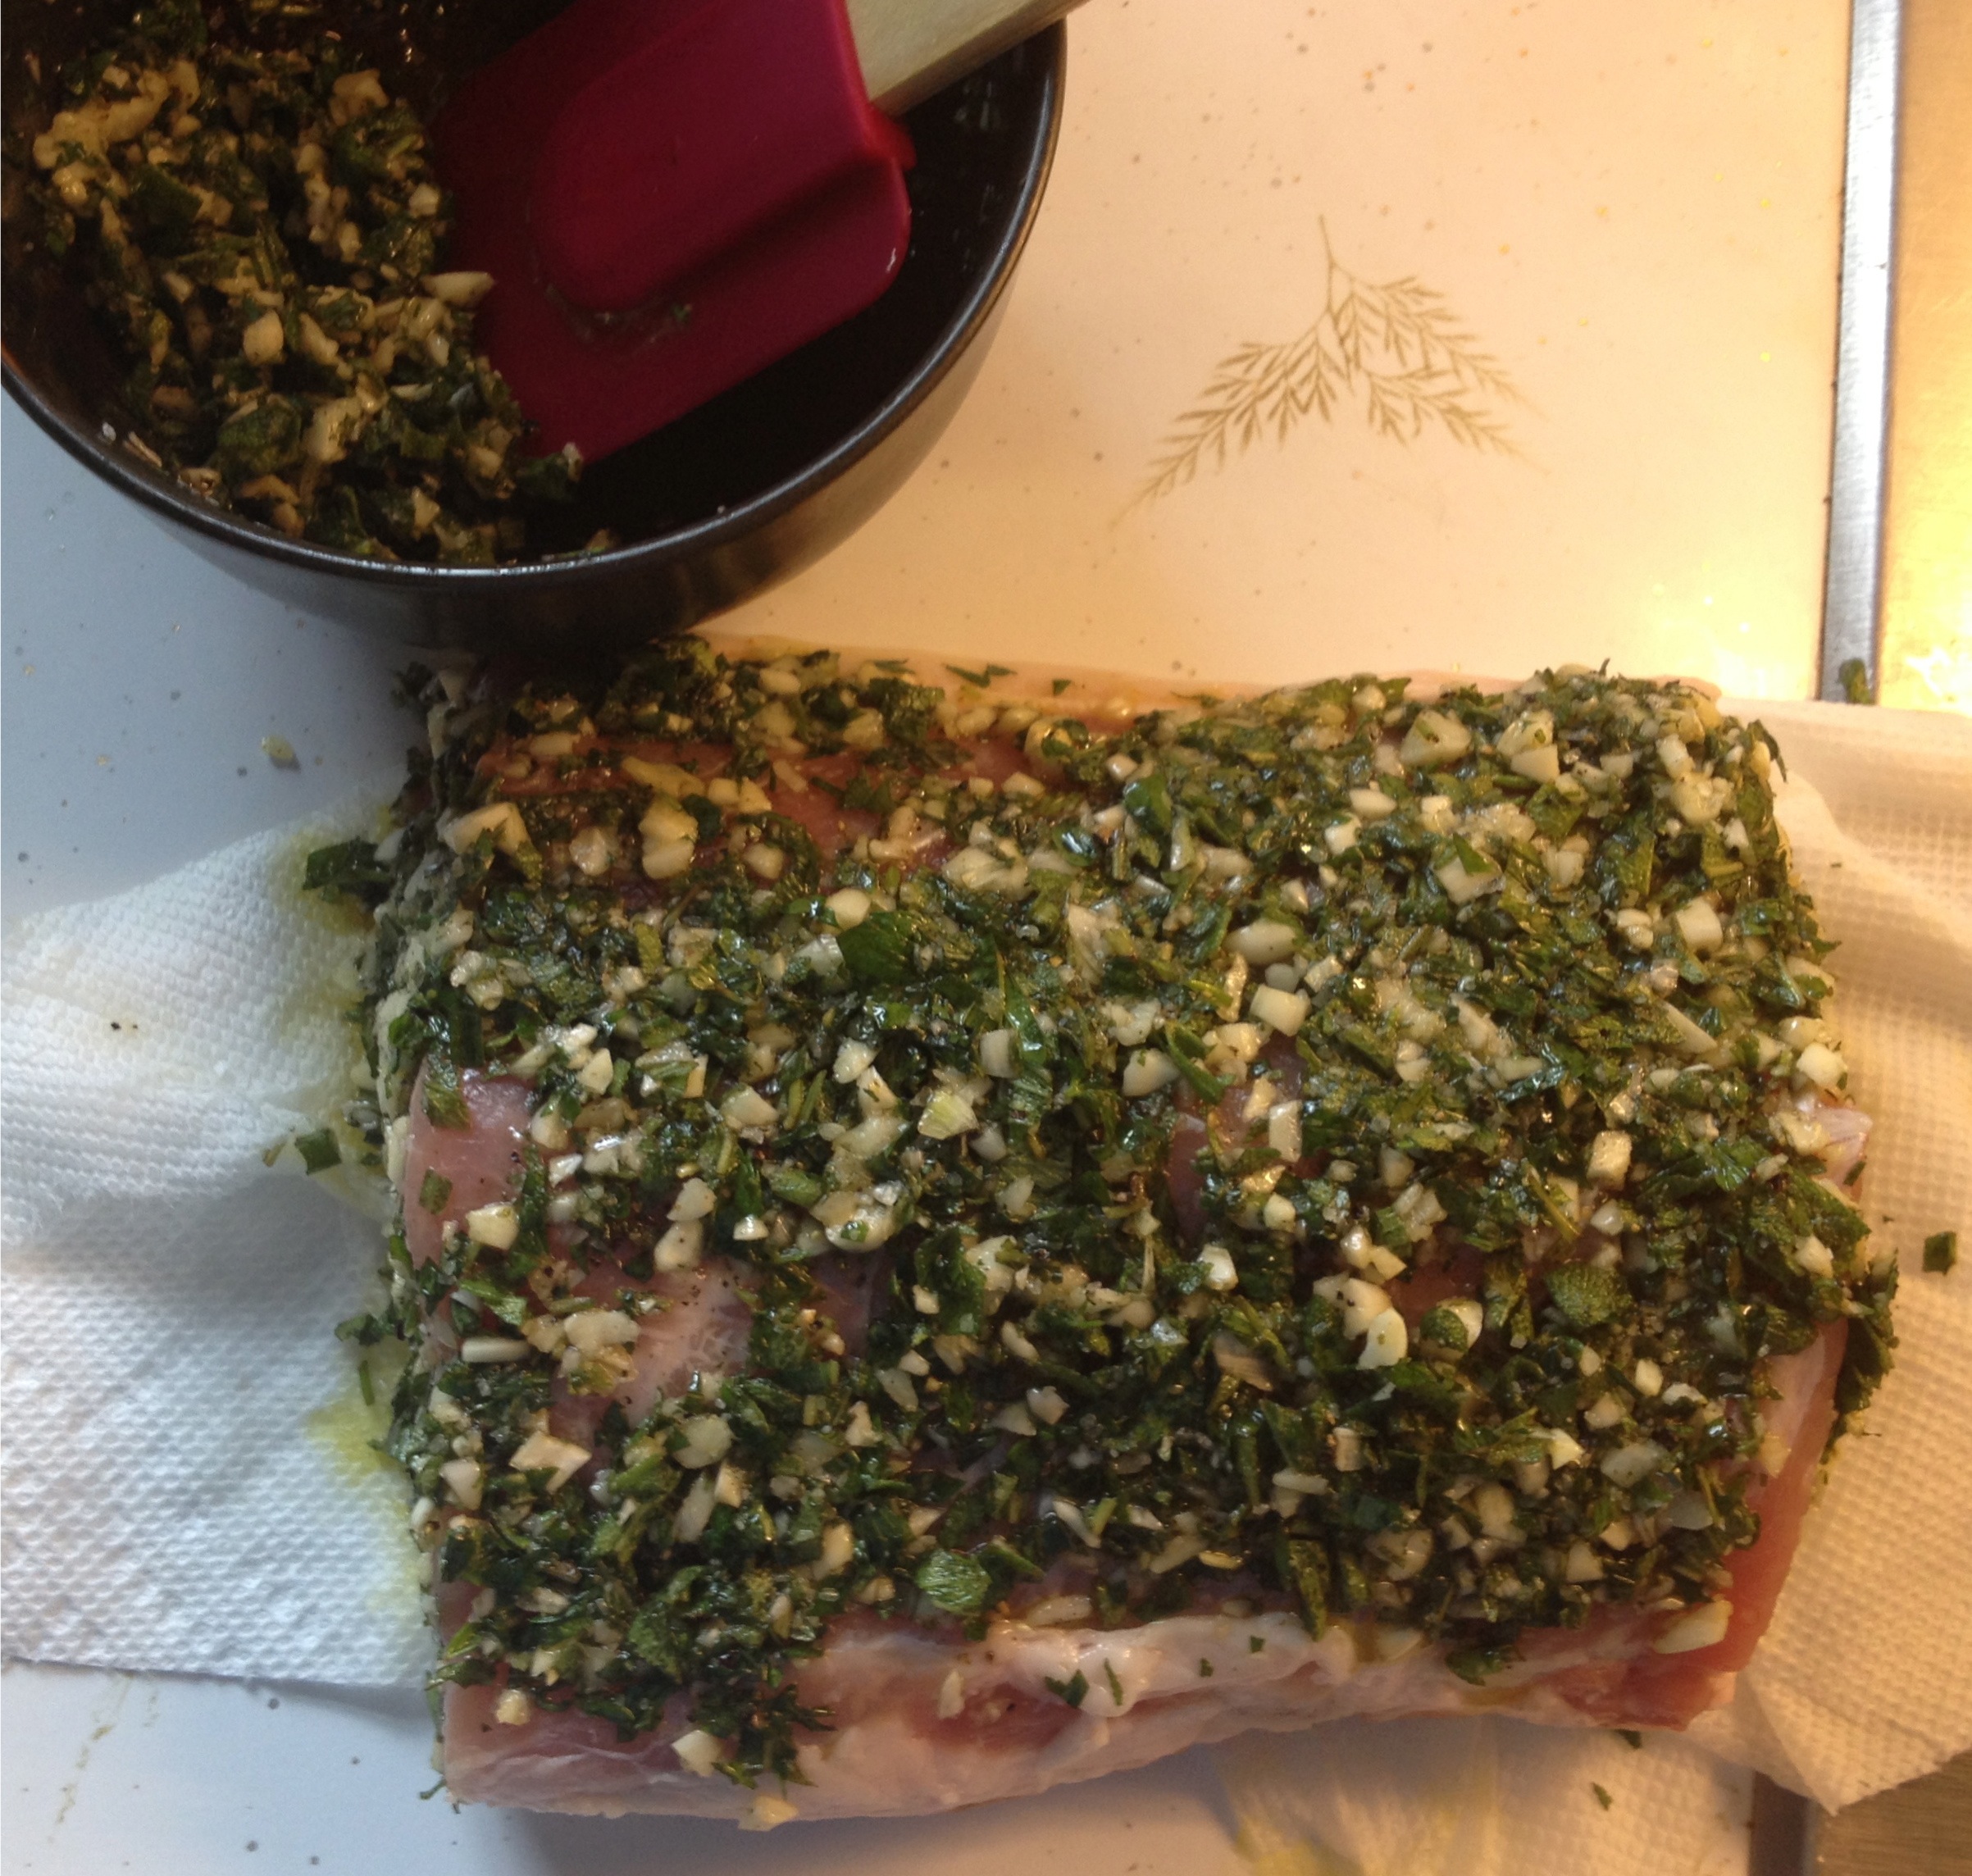 Herb, garlic and olive oil marinade on a pork loin roast.